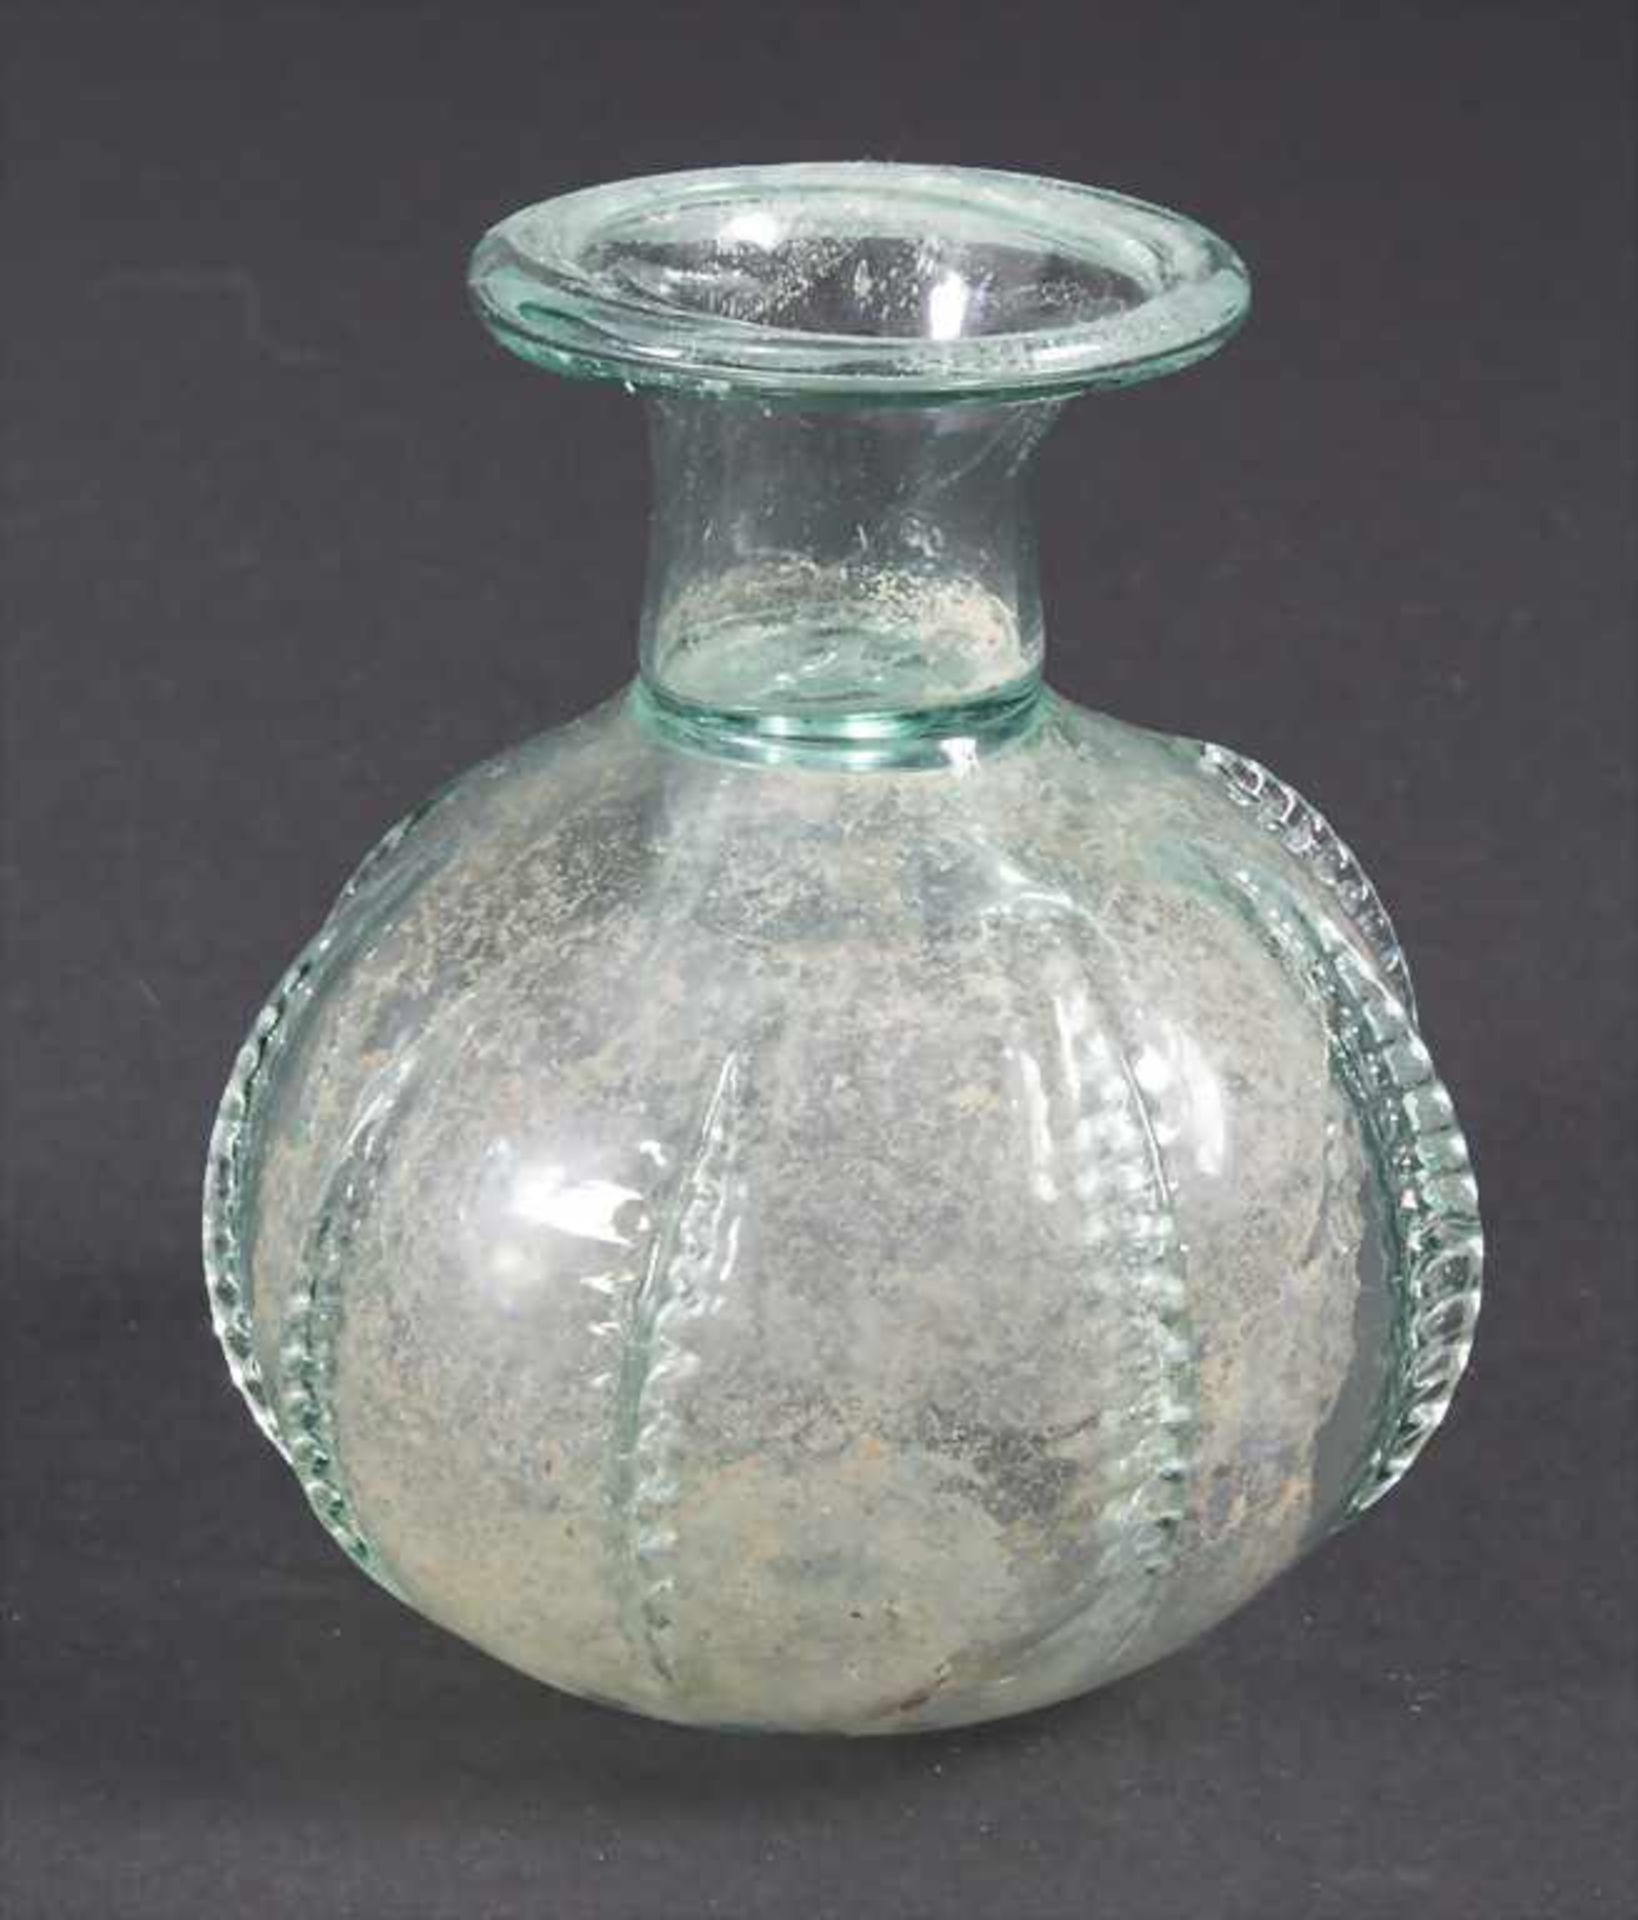 Frühes Tintenglas / An early ink bottle, süddeutsch, wohl 16./17. Jh.